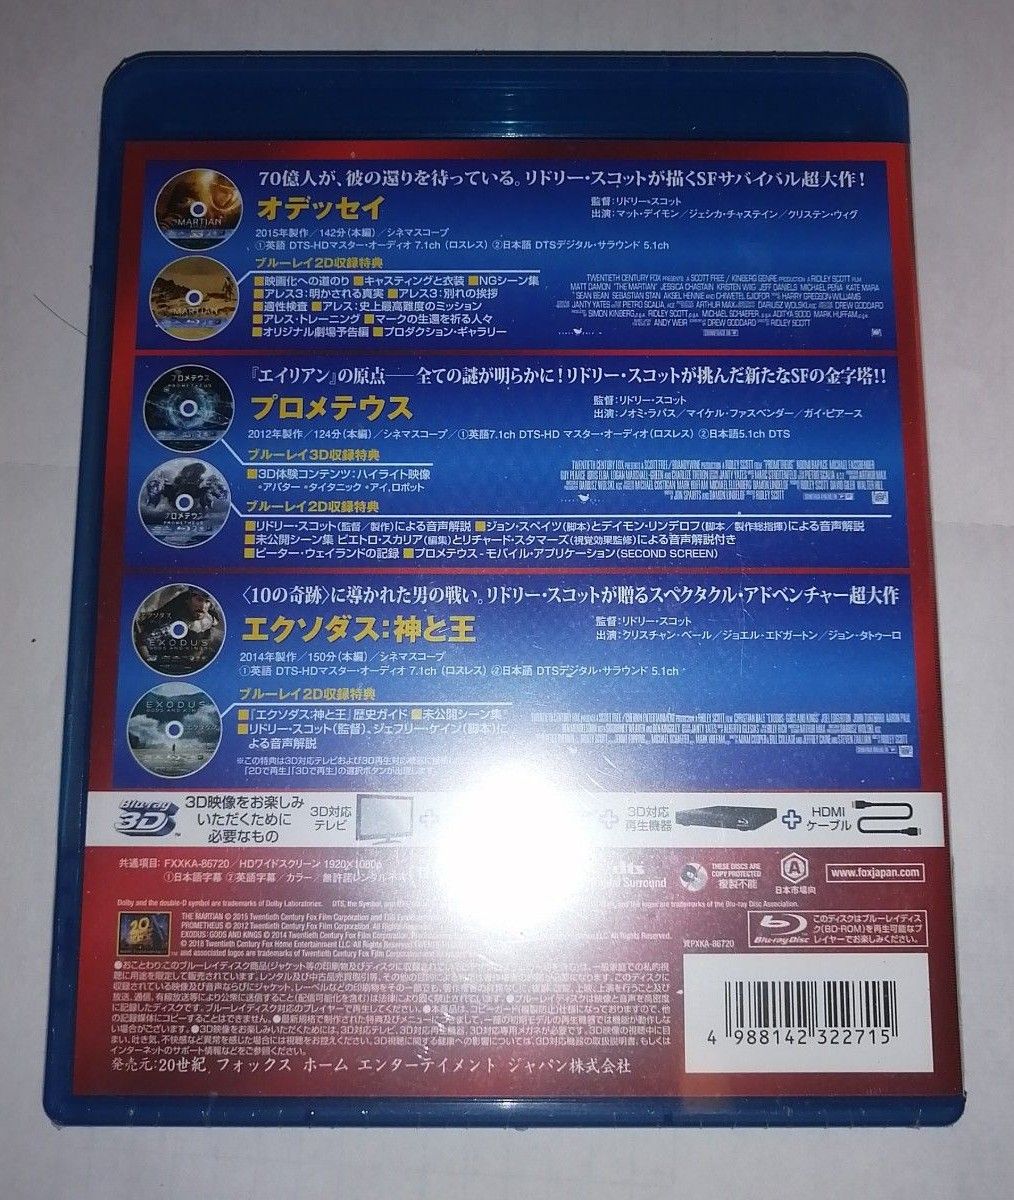 3D Blu-ray リドリー・スコットブルーレイBOX 未開封